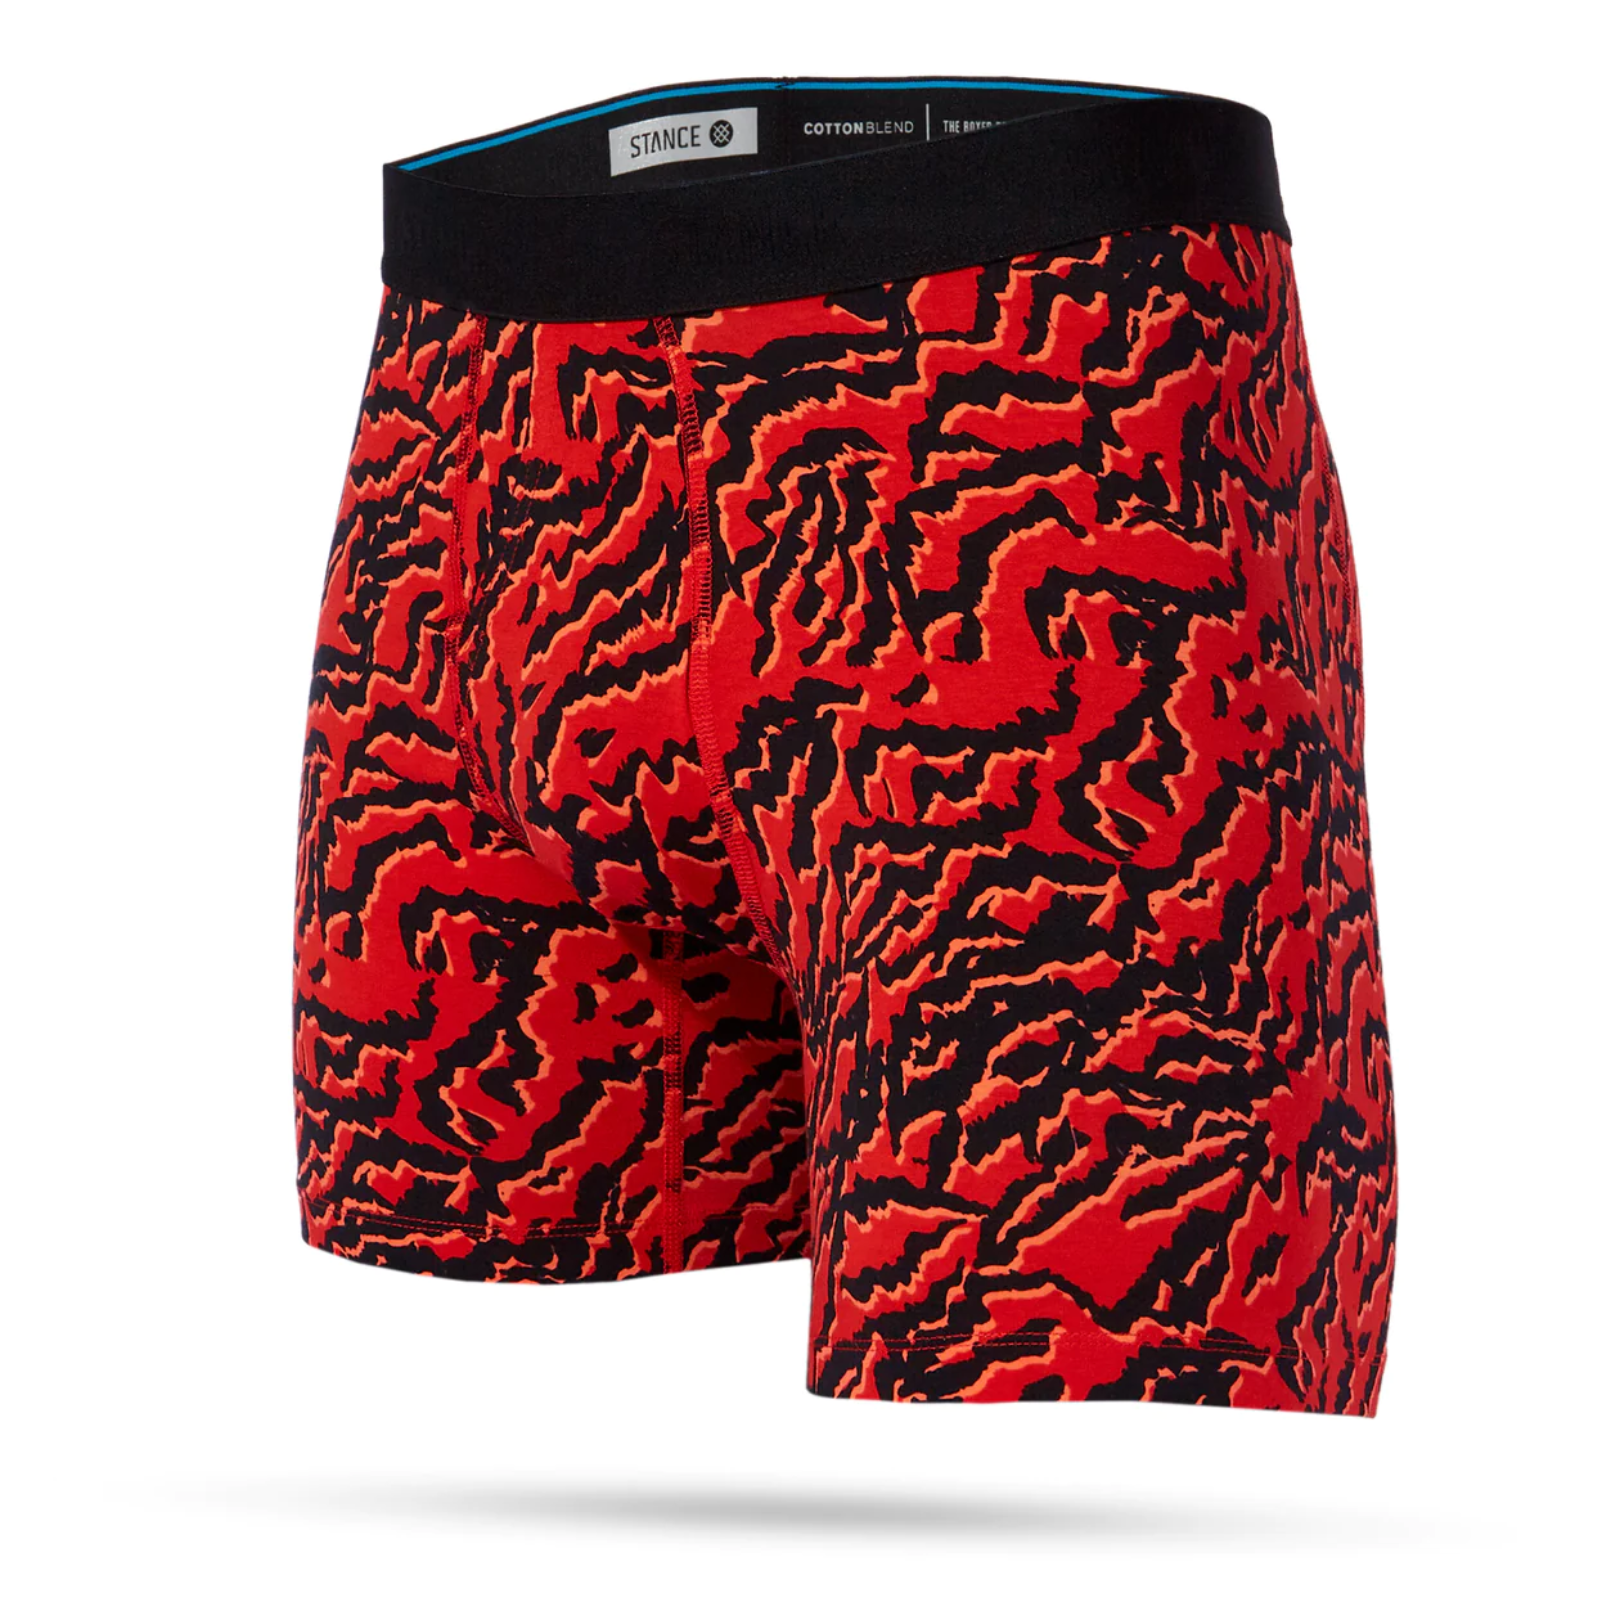 Stance boxer shorts men's black color buy on PRM